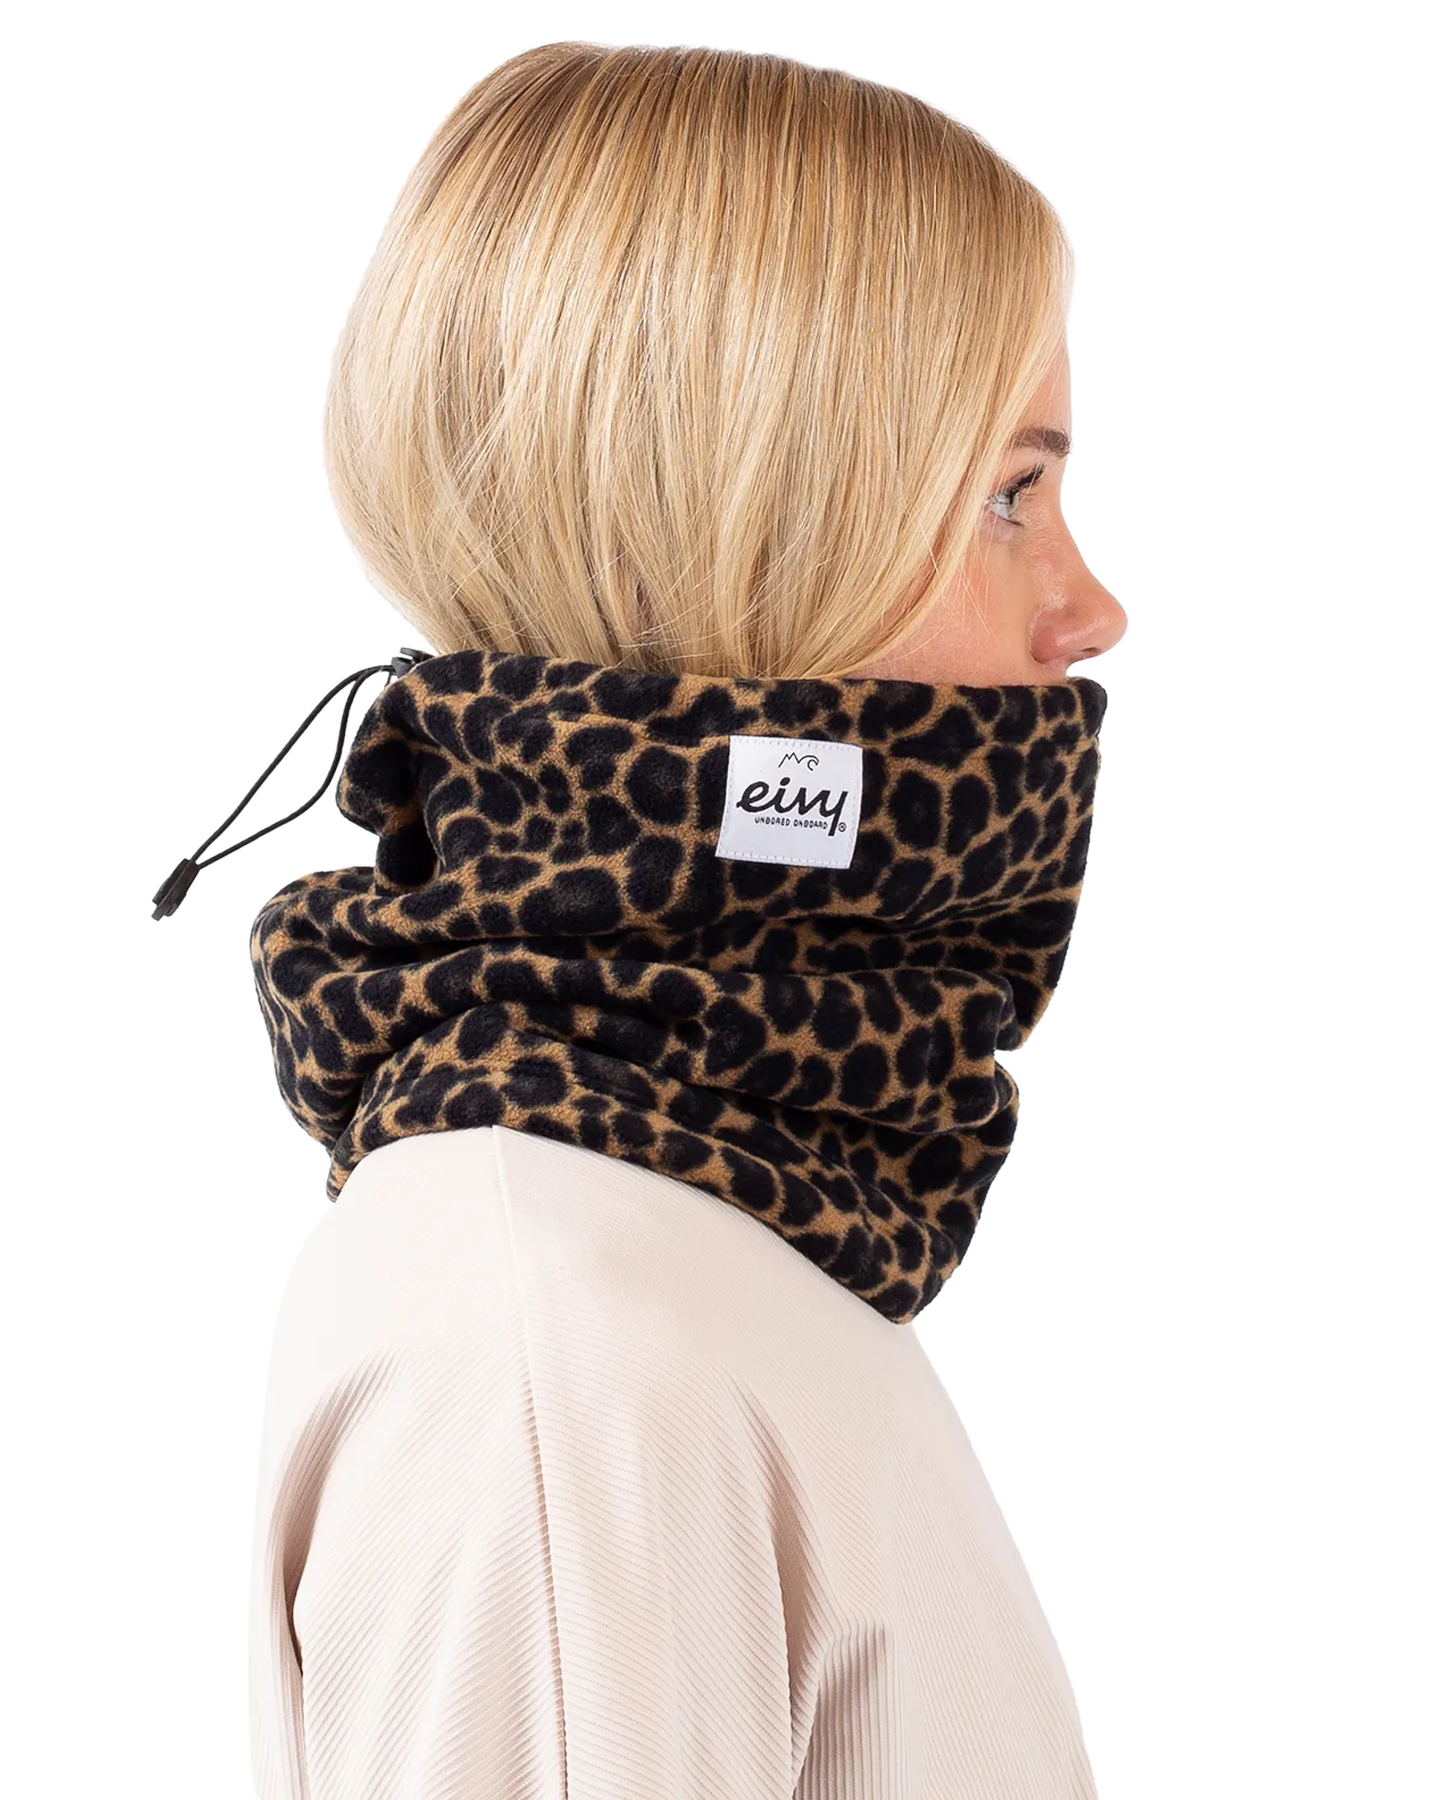 Eivy Adjustable Fleece Women's Neckwarmer - Leopard Neck Warmers & Face Masks - SnowSkiersWarehouse